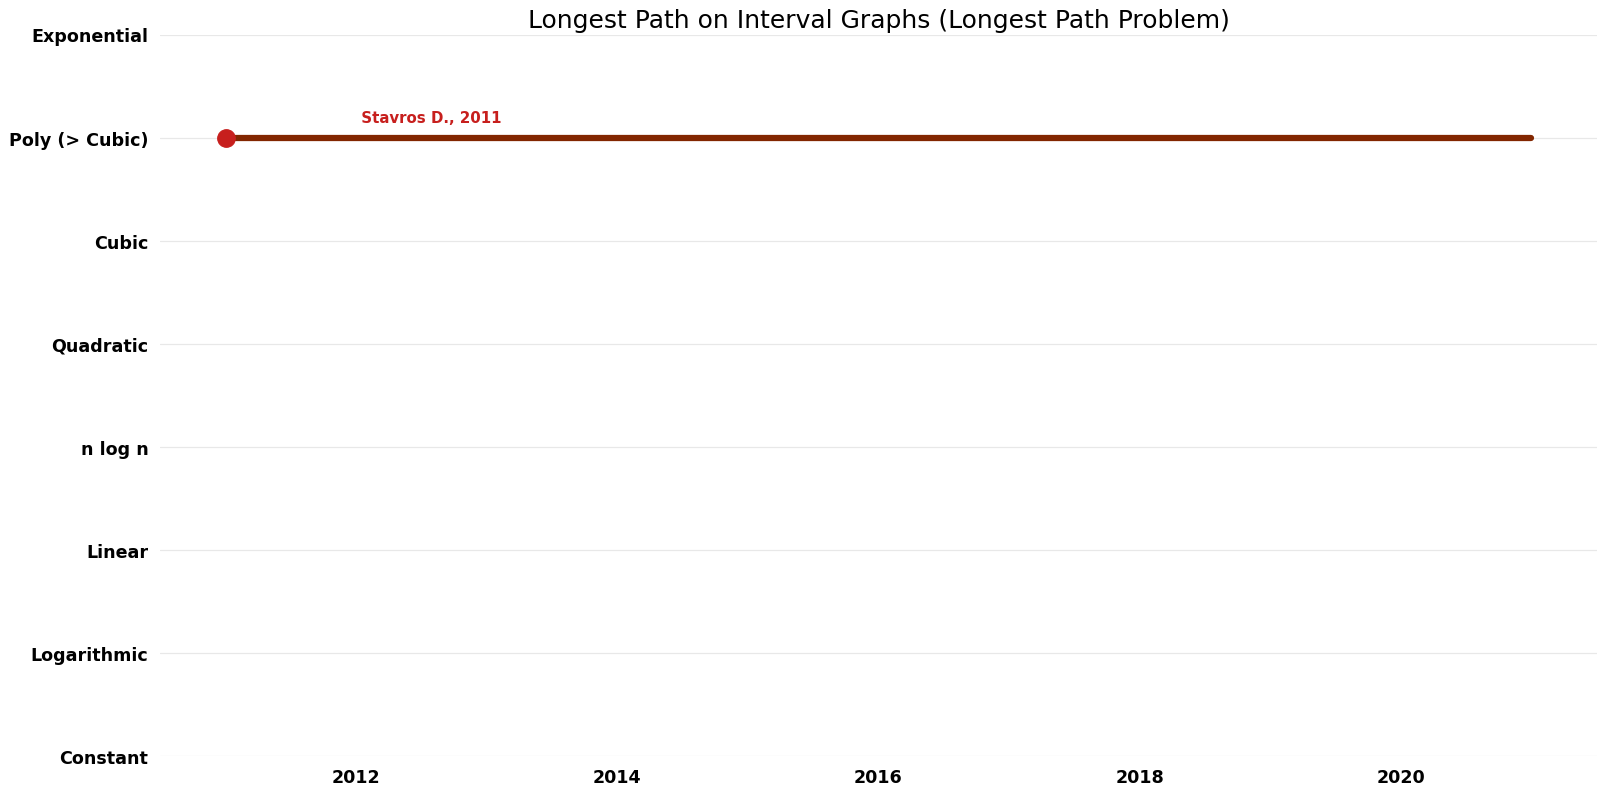 Longest Path Problem - Longest Path on Interval Graphs - Time.png